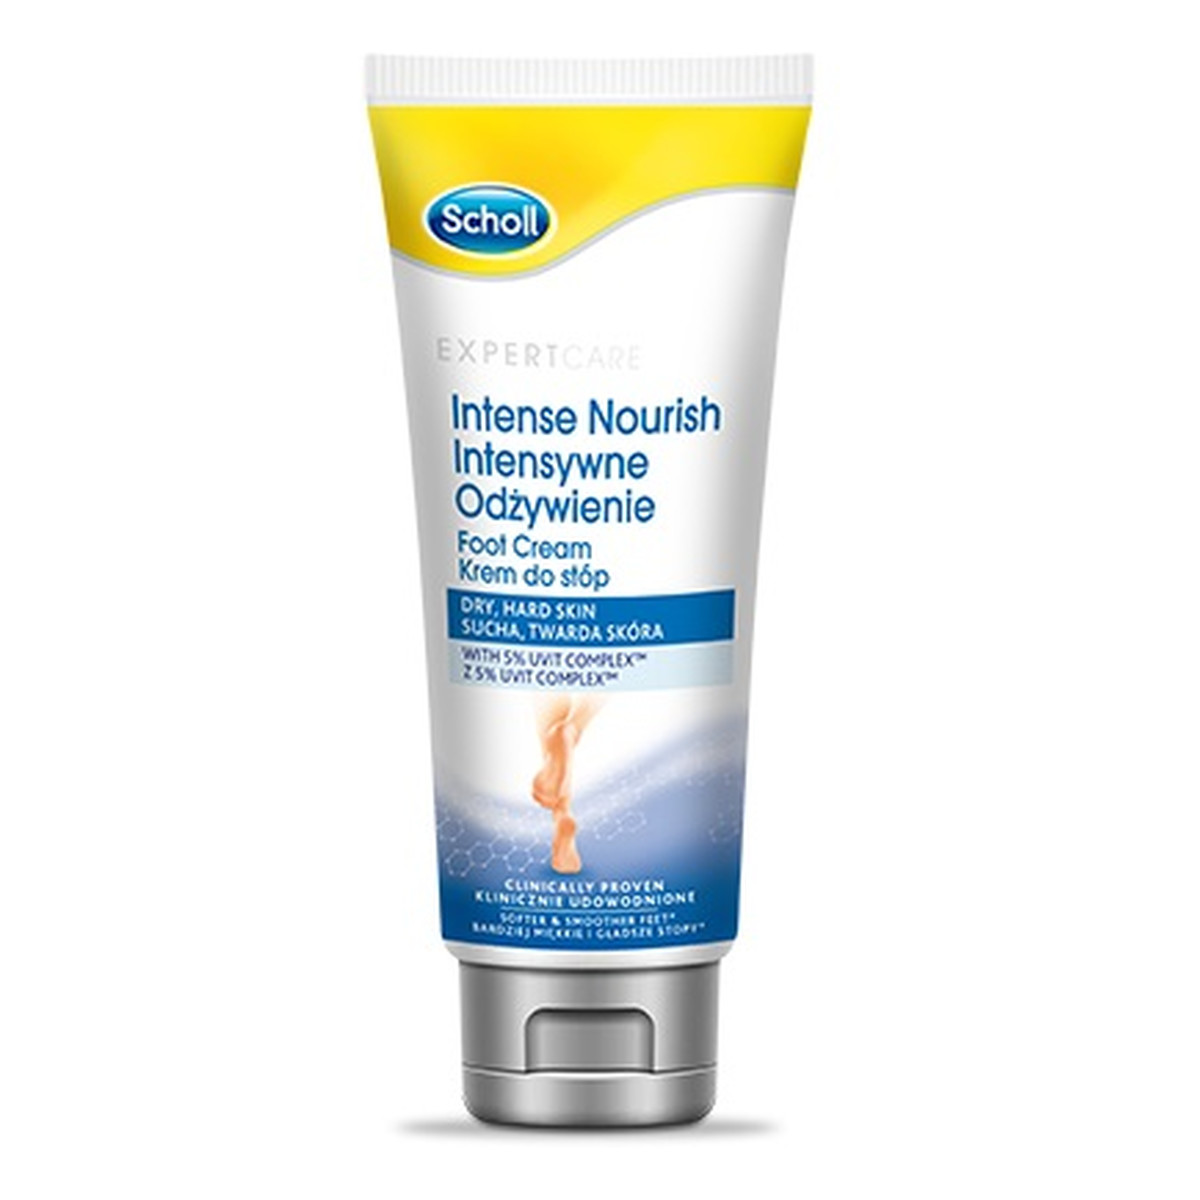 Scholl Expert Care Intense Nourish Foot Cream krem do stóp Intensywne Odżywienie 75ml